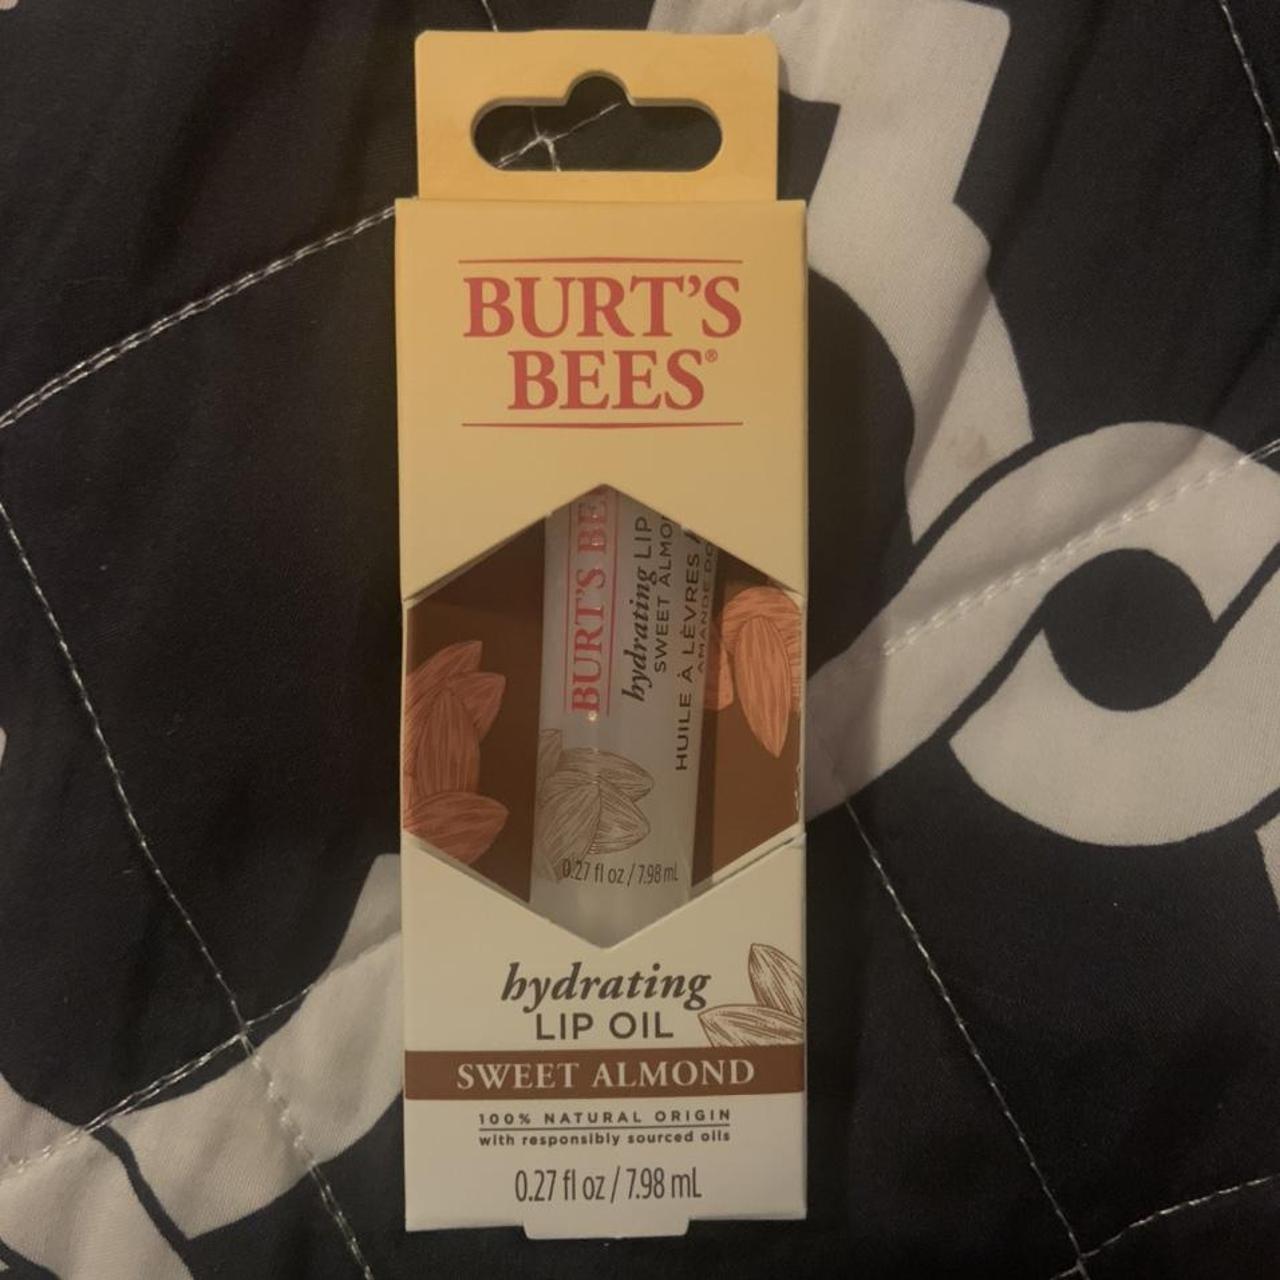 Burt's Bees Yellow and Brown Skincare